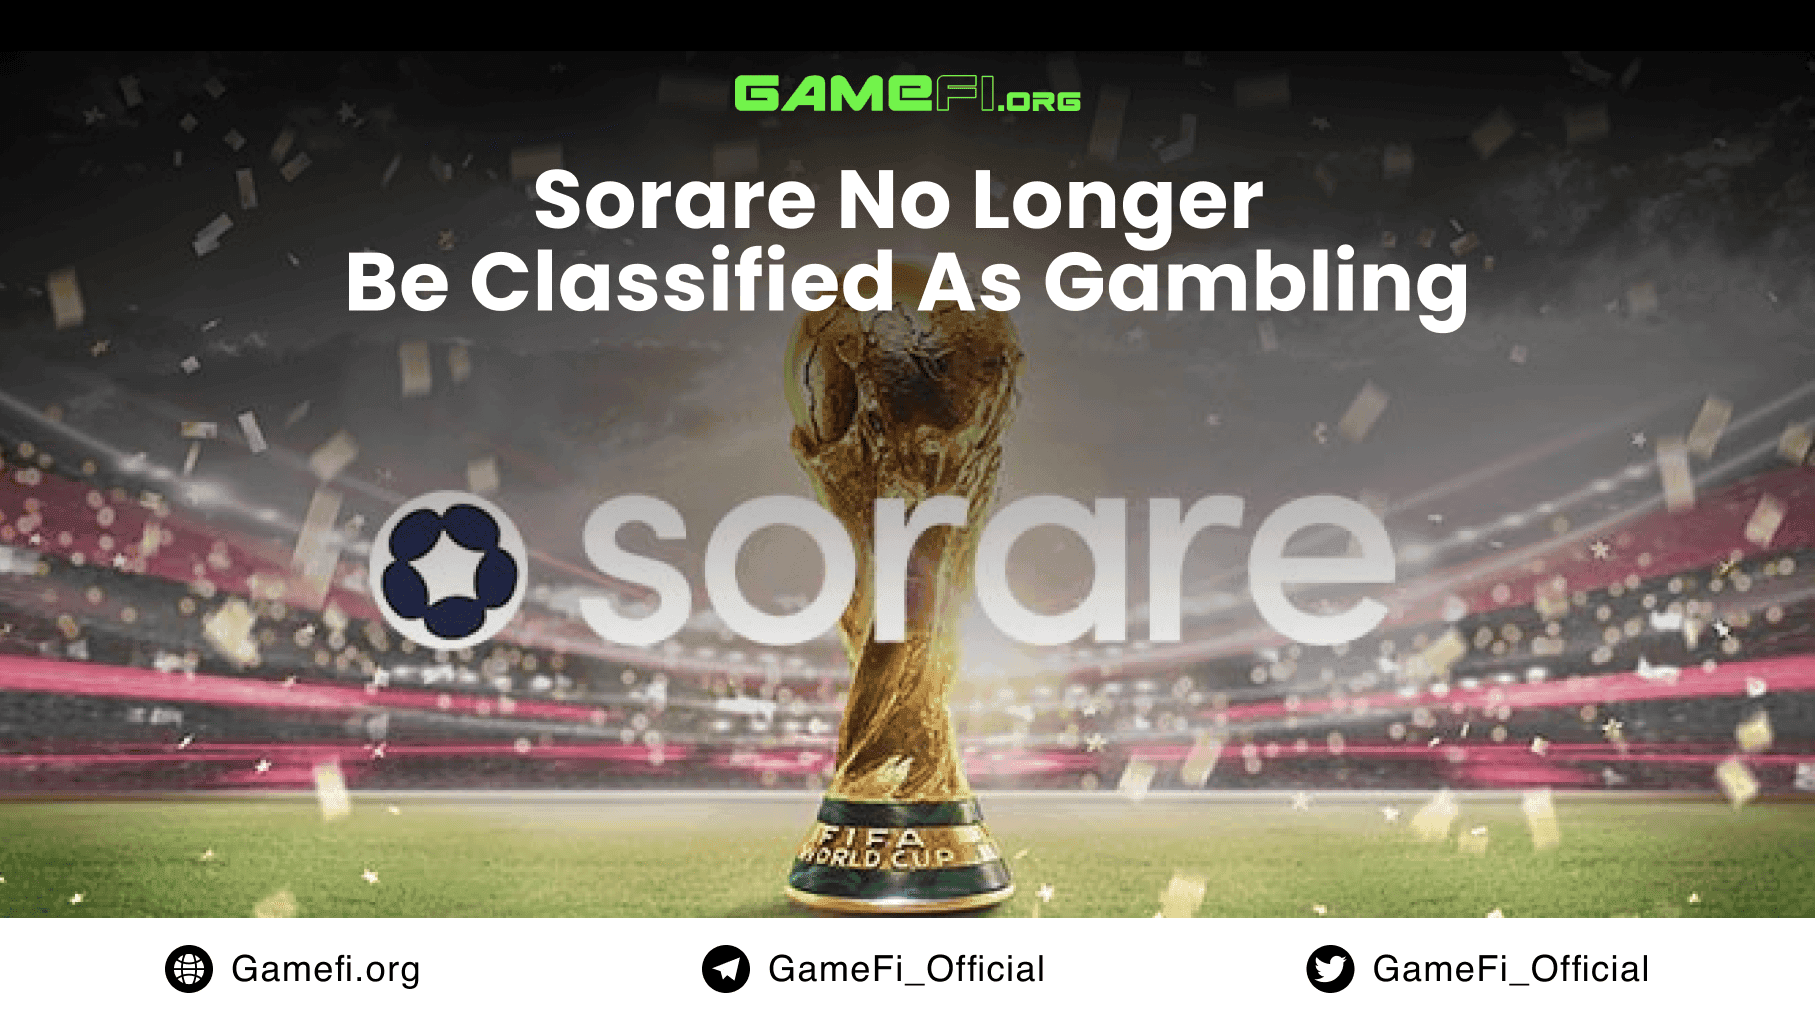 Sorare No Longer be Classified as Gambling ahead of Fifa World Cup